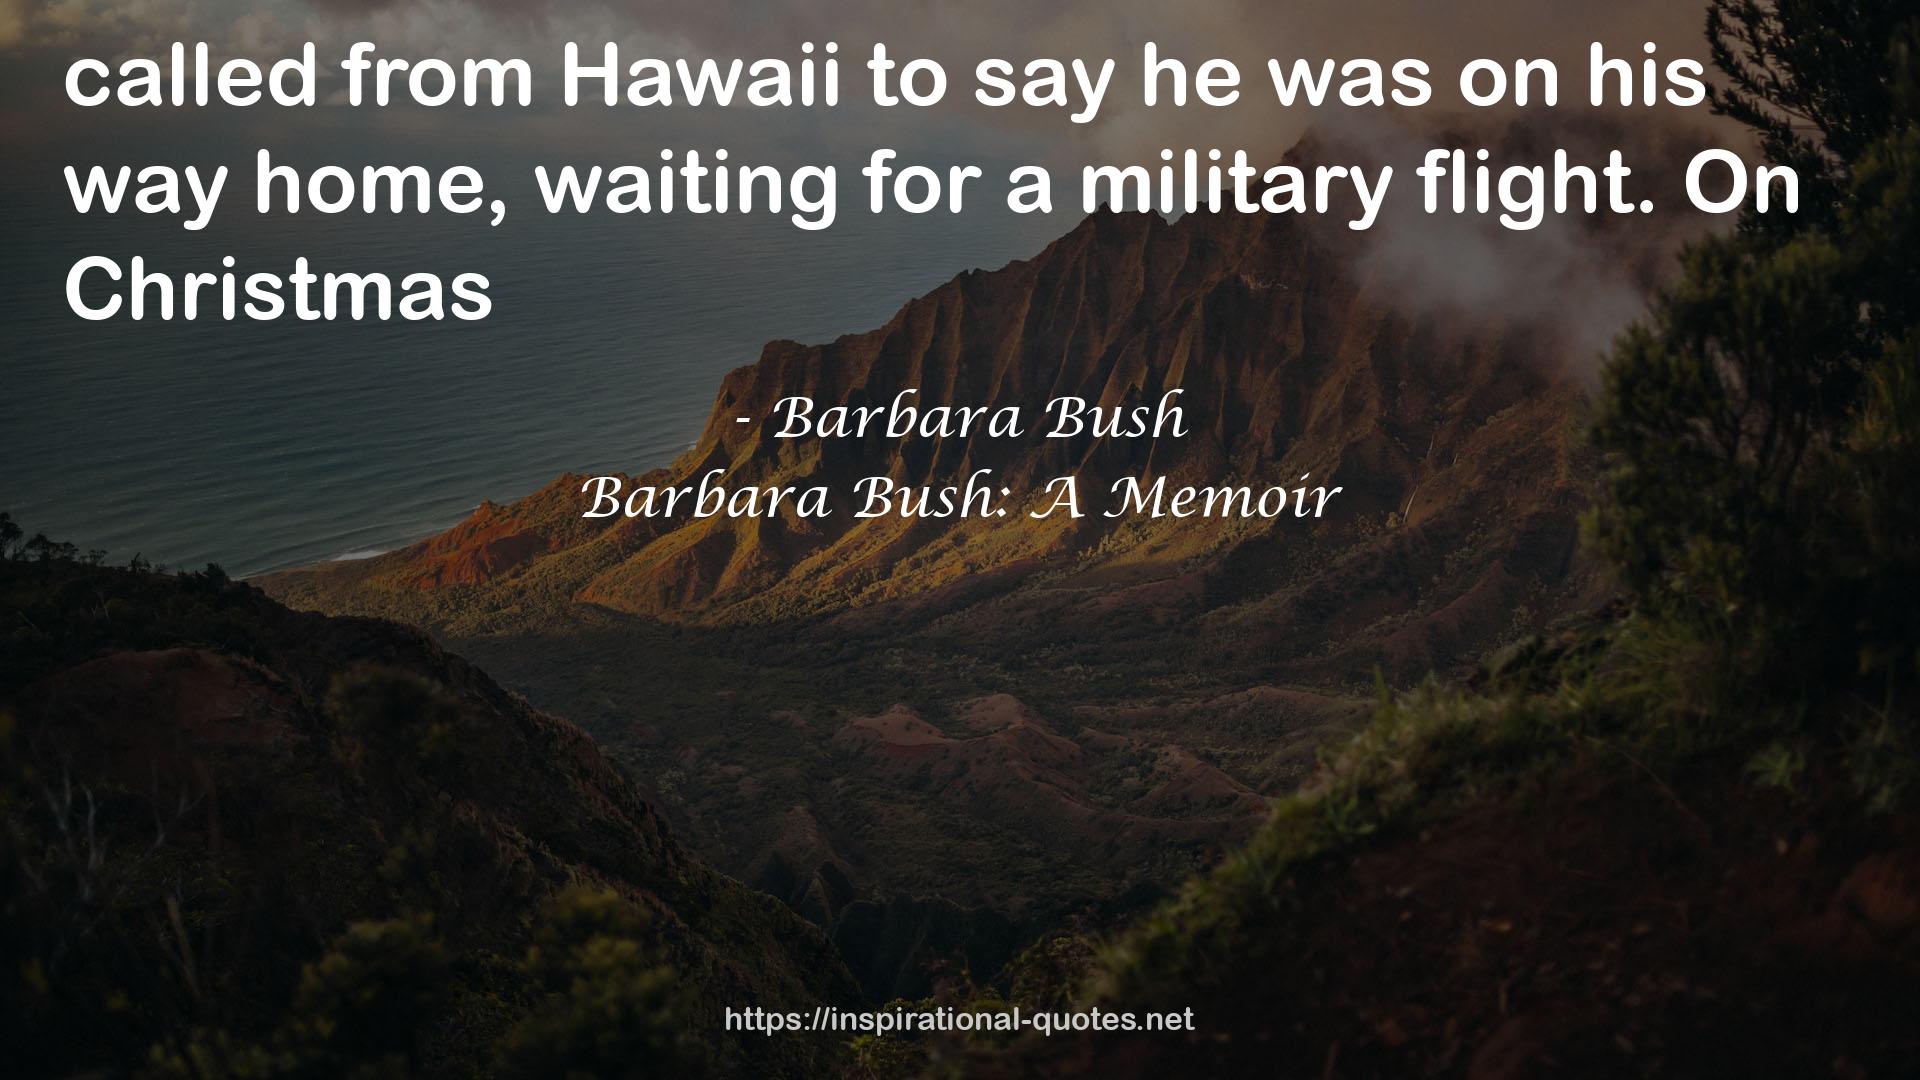 Barbara Bush: A Memoir QUOTES